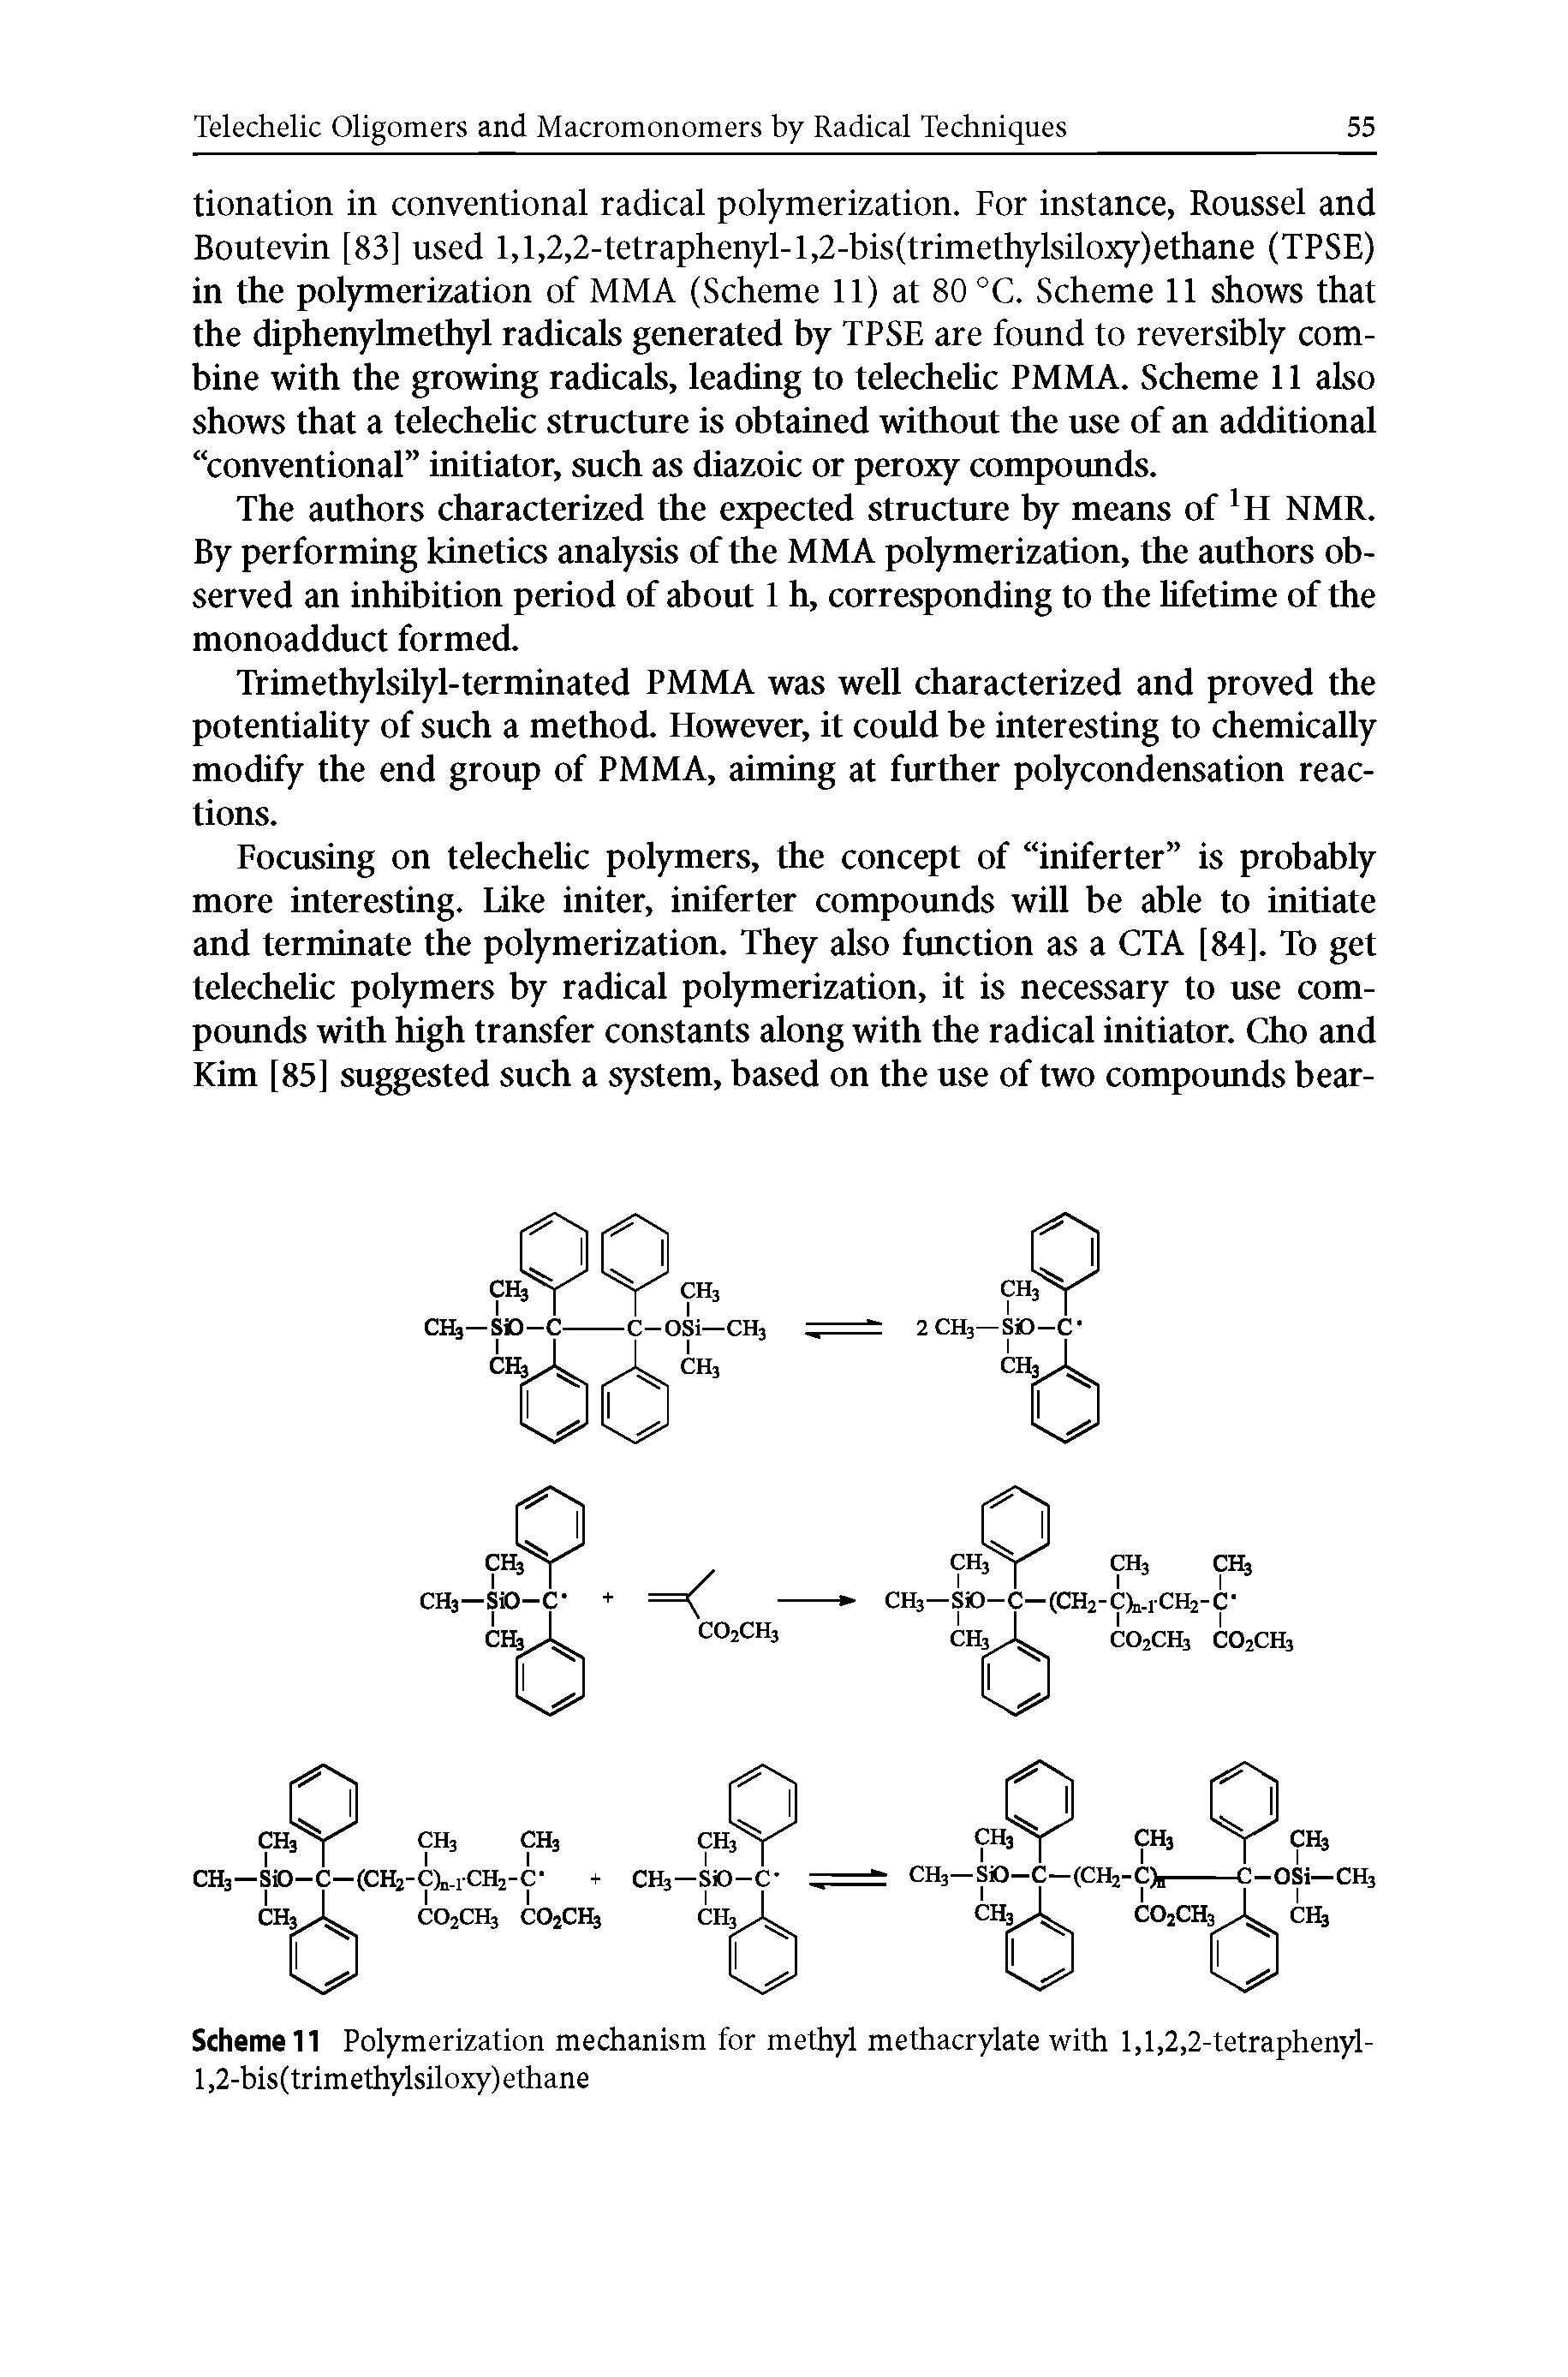 Scheme 11 Polymerization mechanism for methyl methacrylate with 1,1,2,2-tetraphenyl-l,2-bis(trimethylsiloxy)ethane...